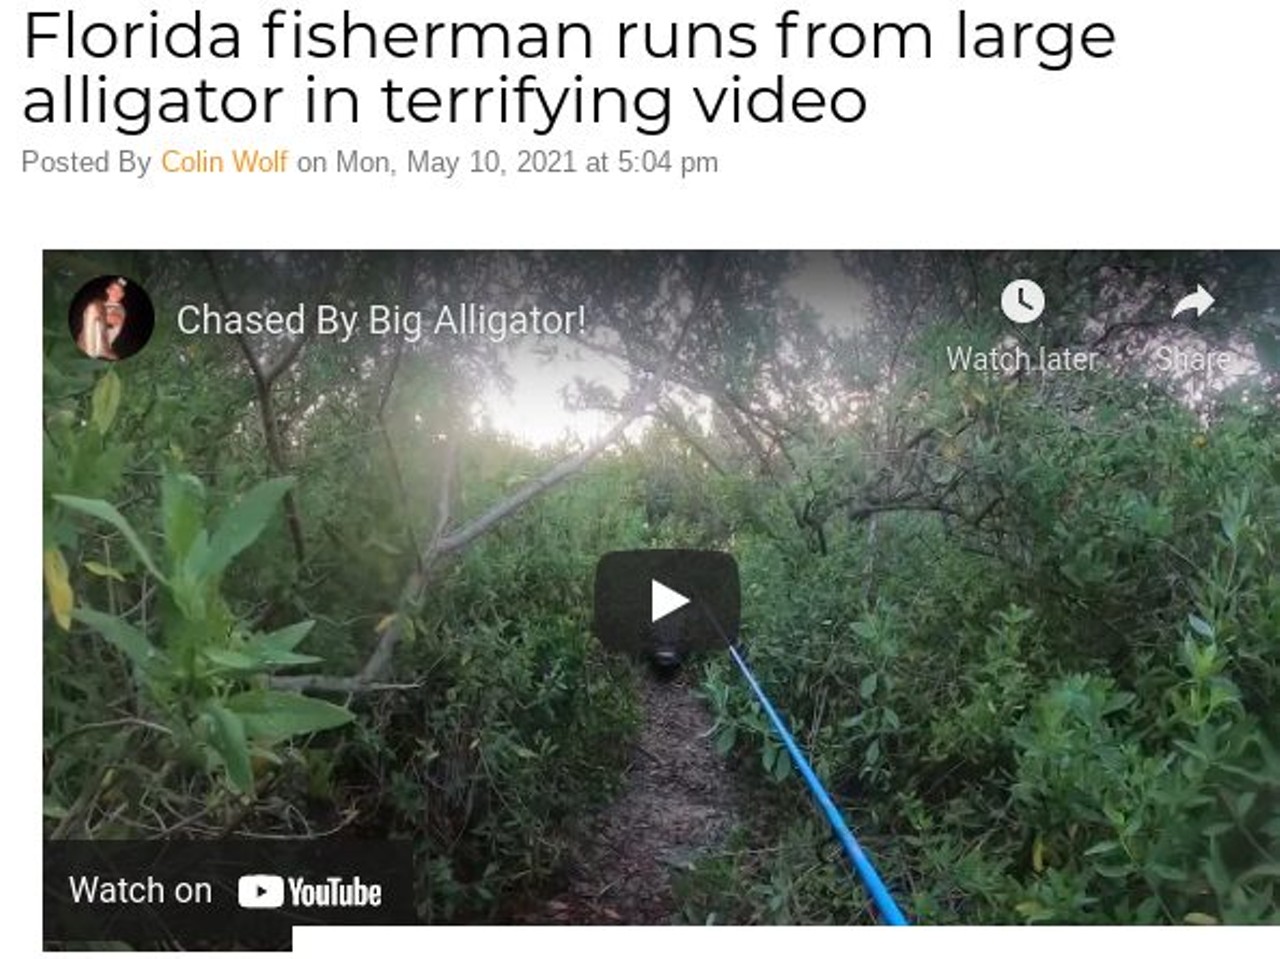 Florida fisherman runs from large alligator in terrifying video
